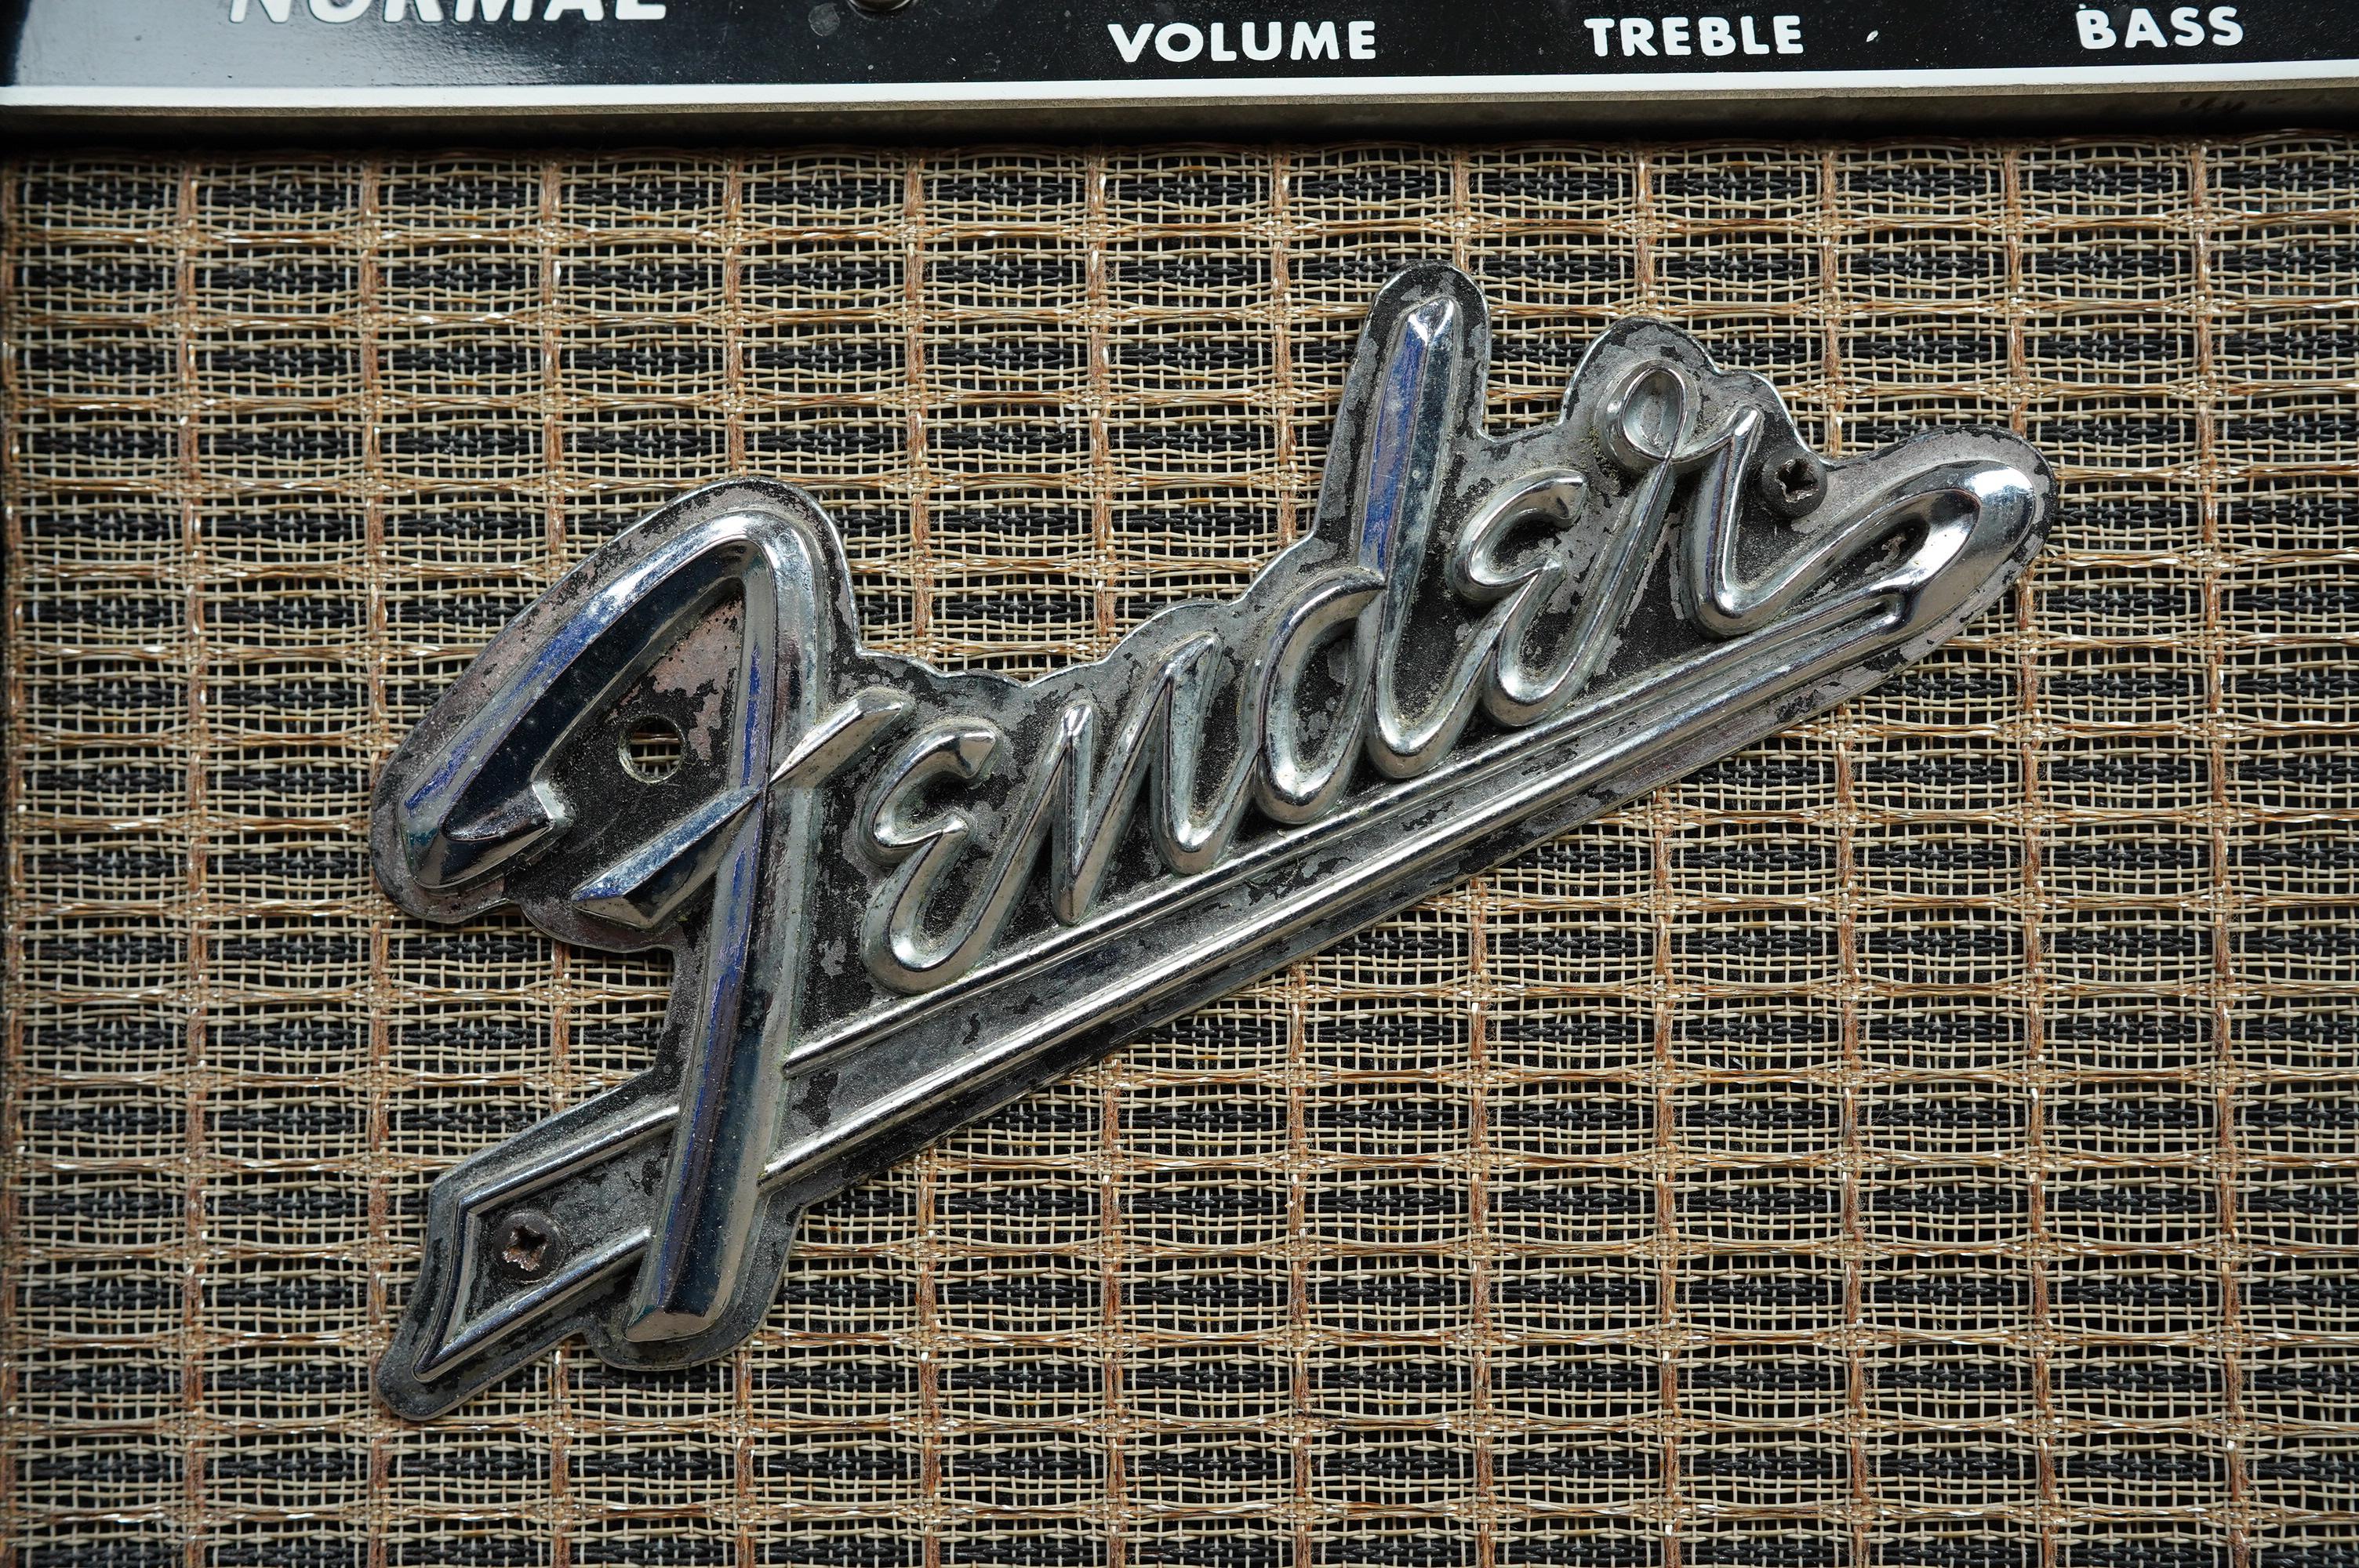 1967 Fender Vibrolux Reverb